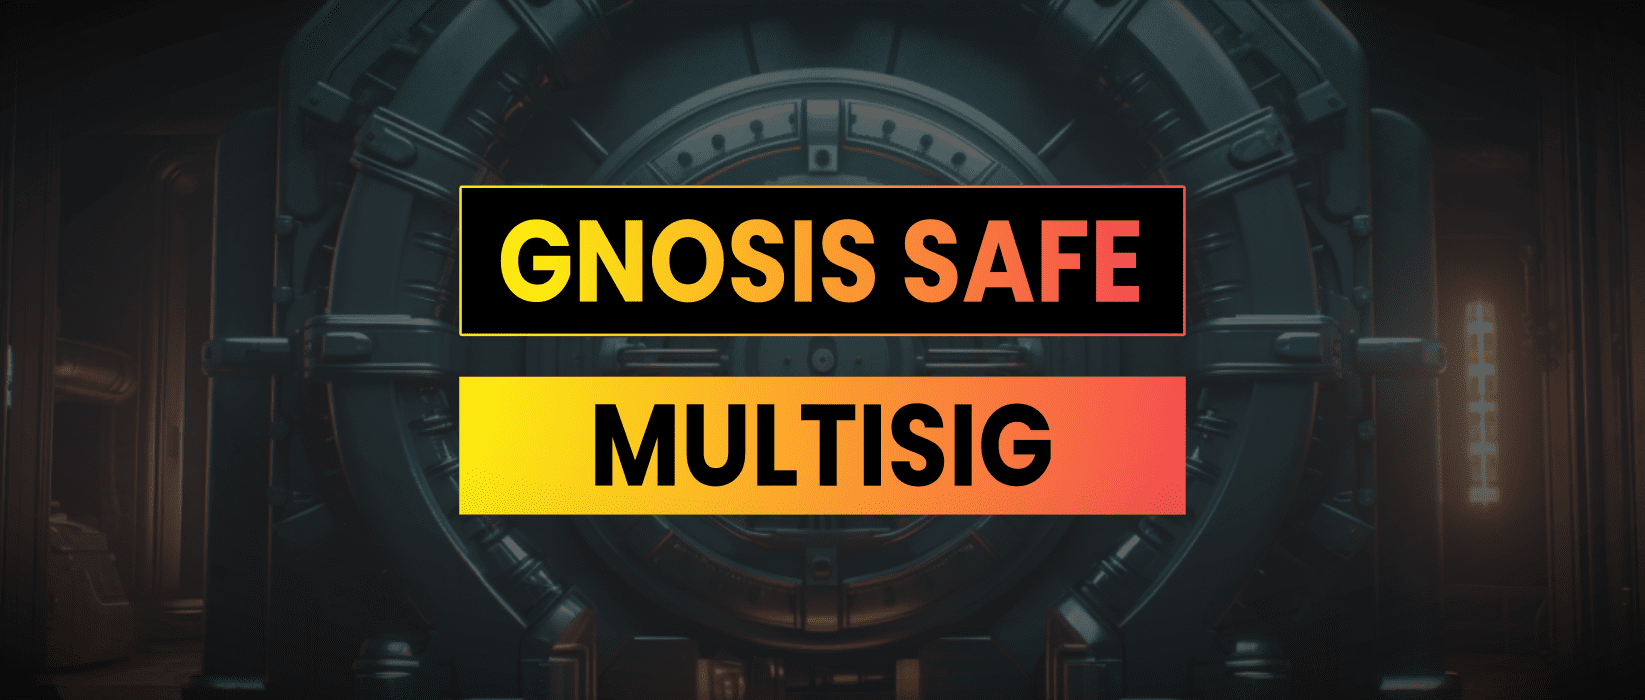 gnosis safe multisig